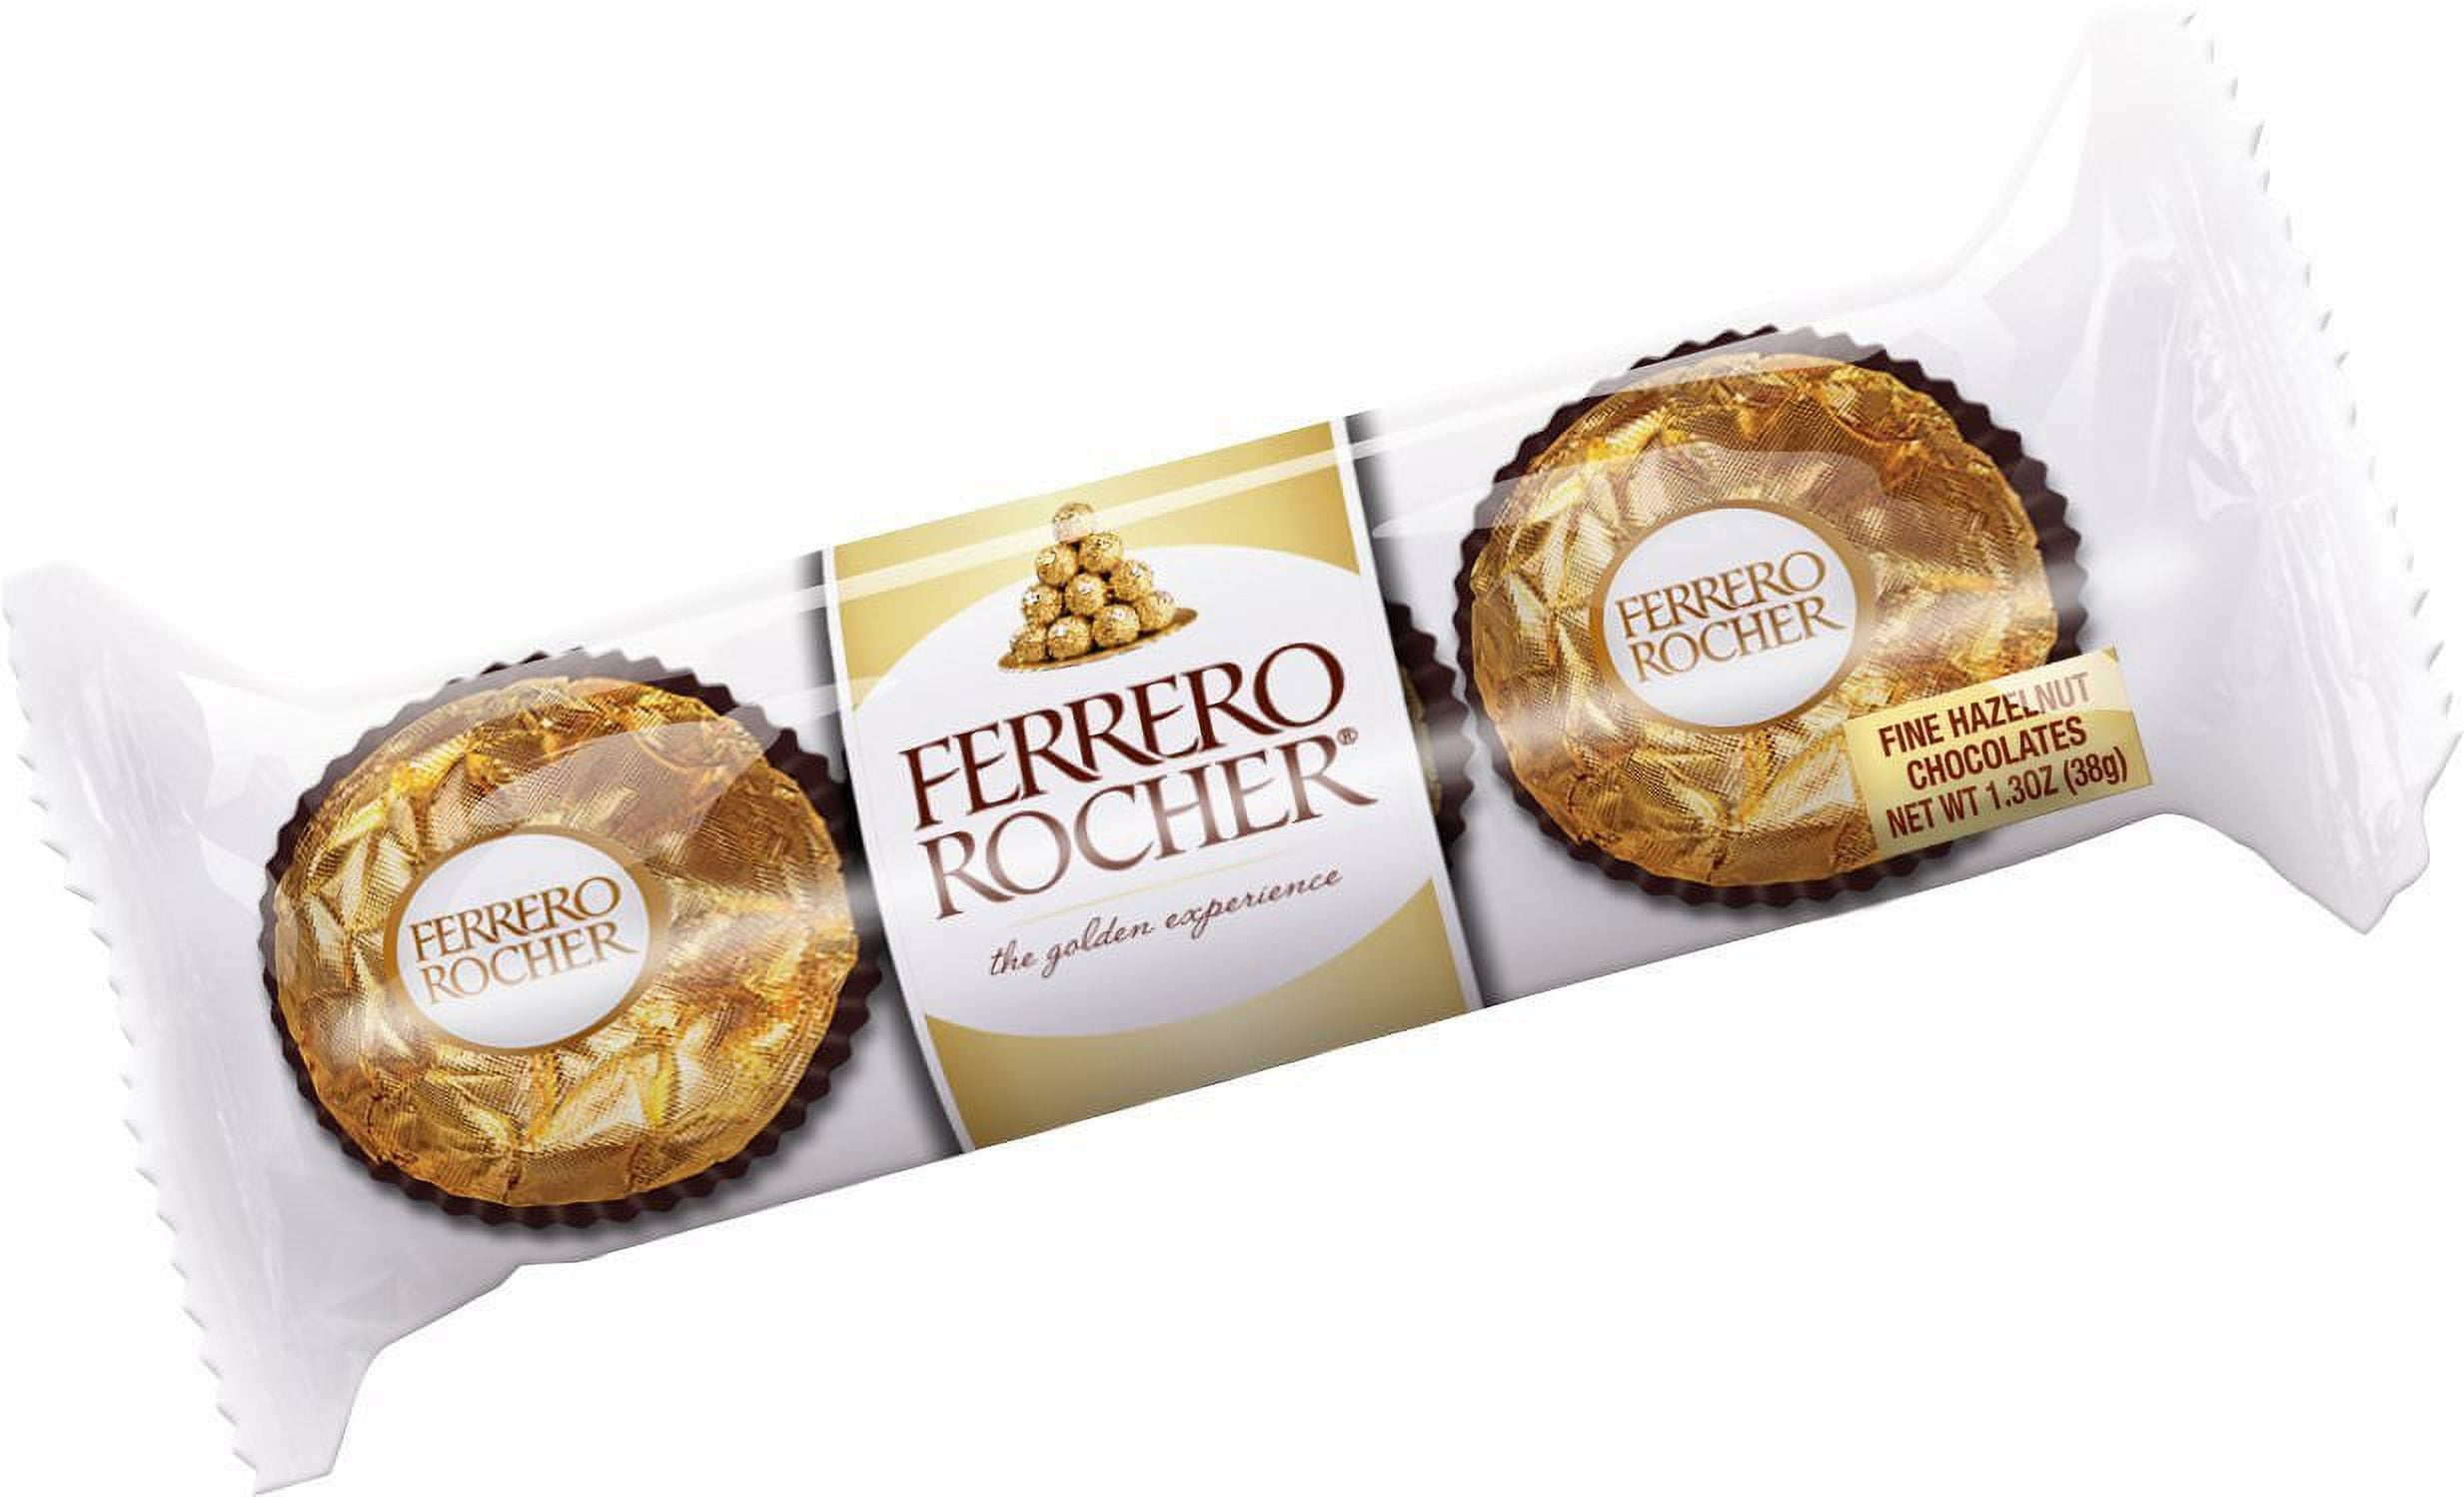 Ferrero Rocher Hazelnut Chocolates (48 pk.) – My Kosher Cart